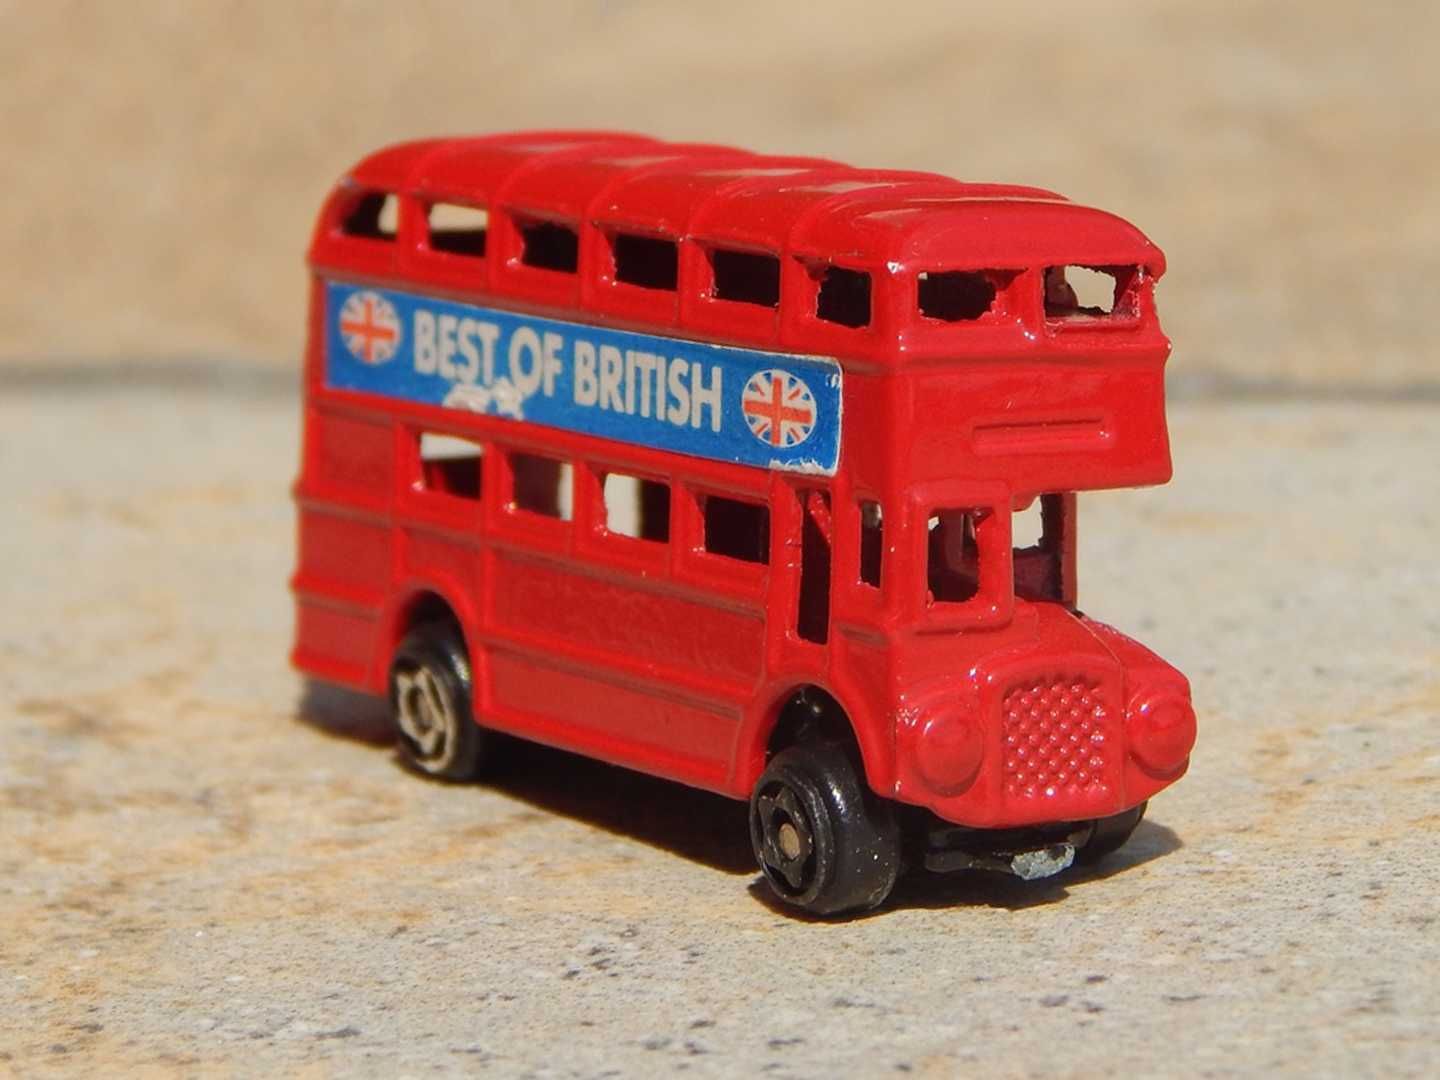 Macheta metalica jucarie autobuz londonez scara 1:120